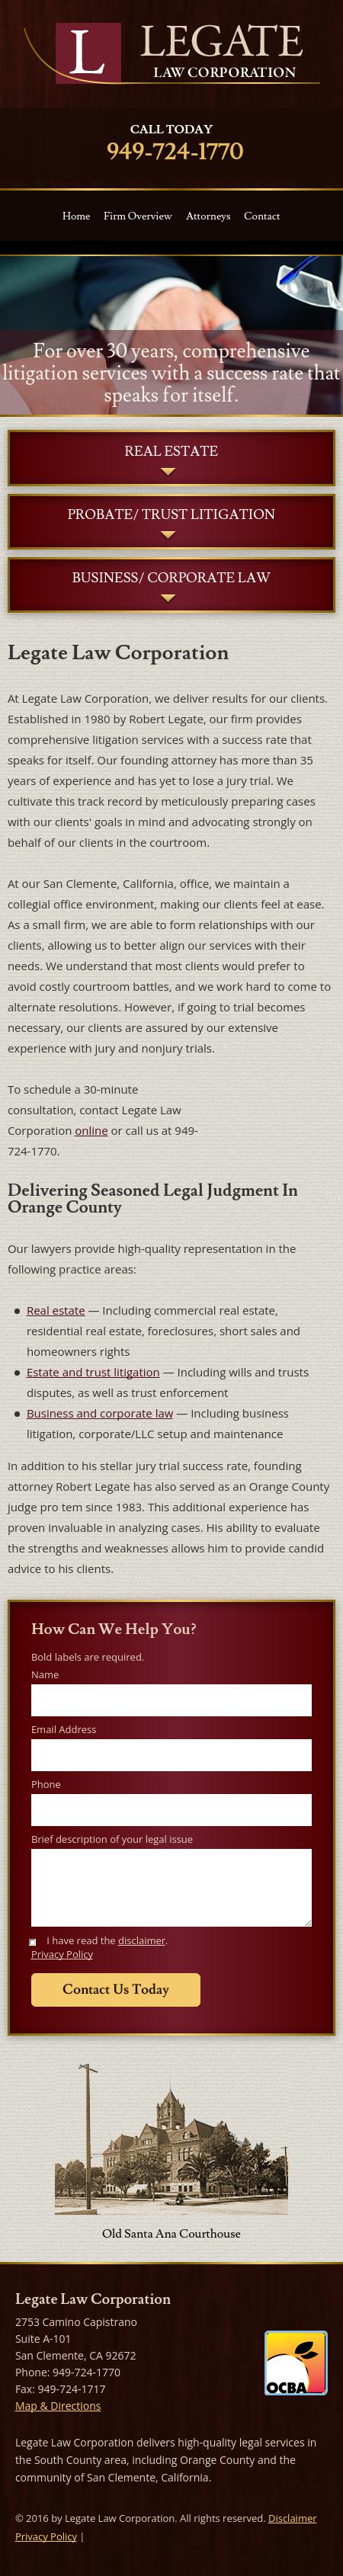 Legate Law Corporation - Newport Beach CA Lawyers